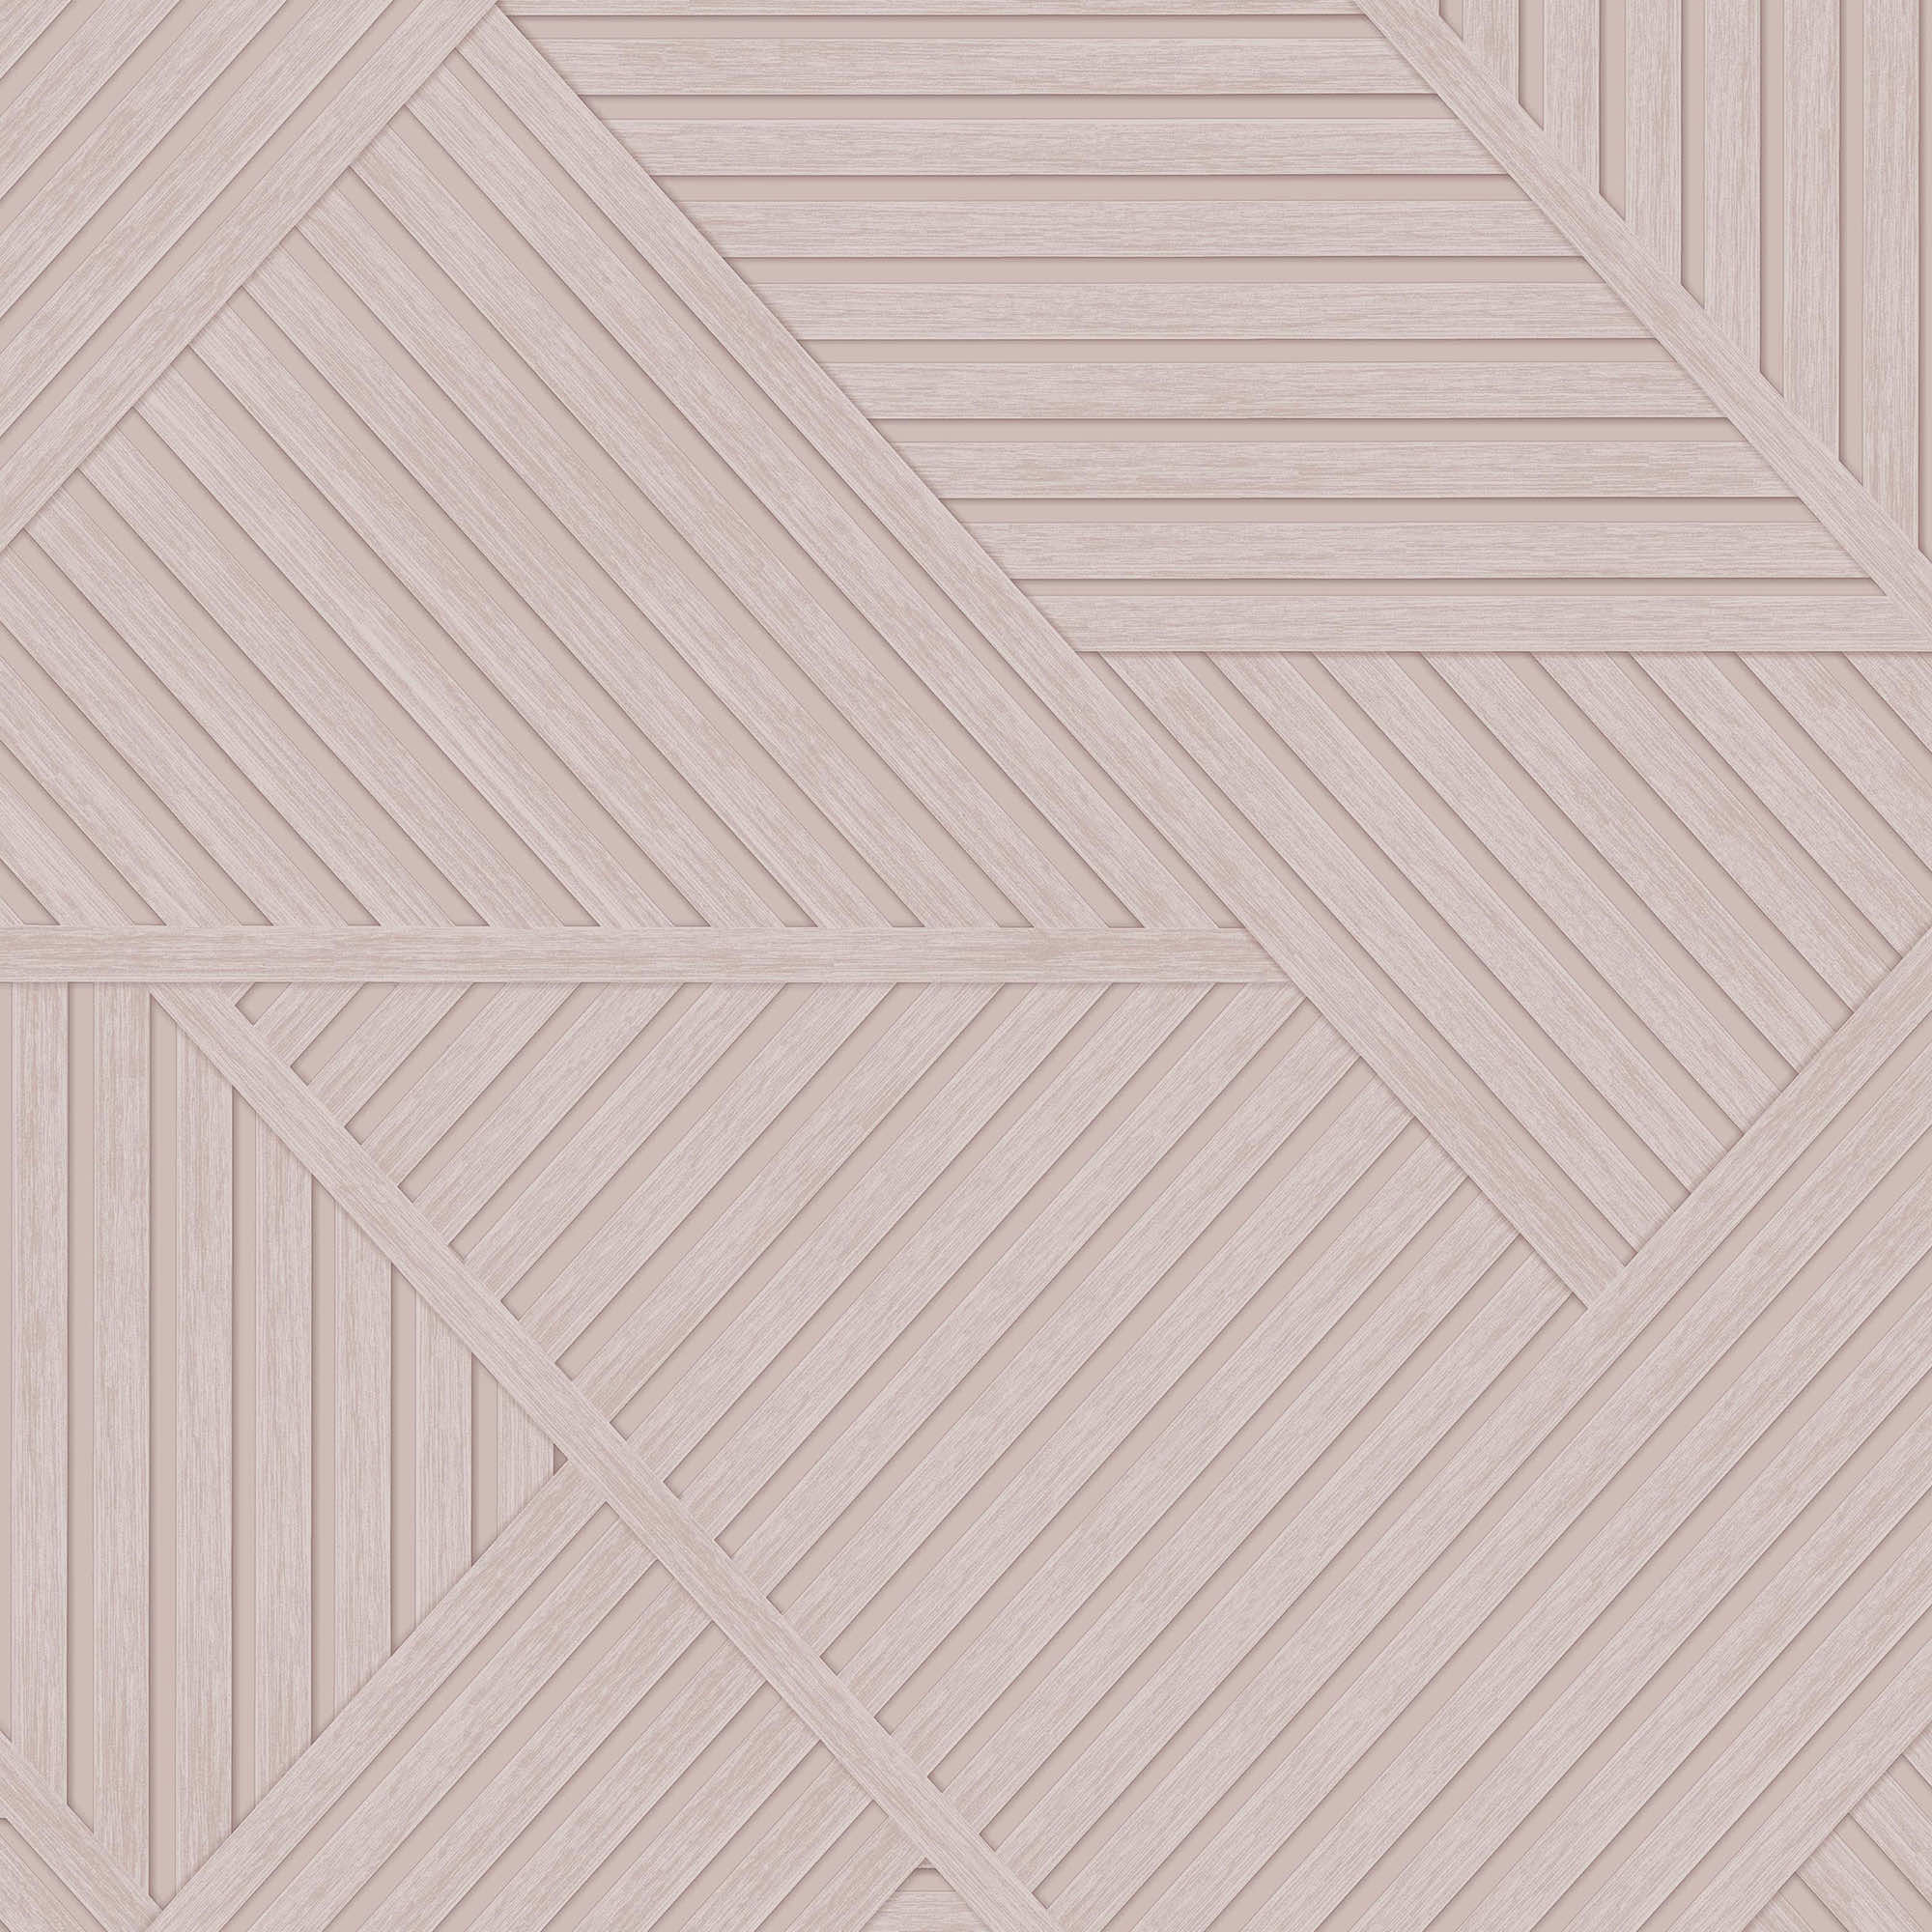 Holden Decor Wood Geometric Pink Wallpaper - 10.05m x 53cm